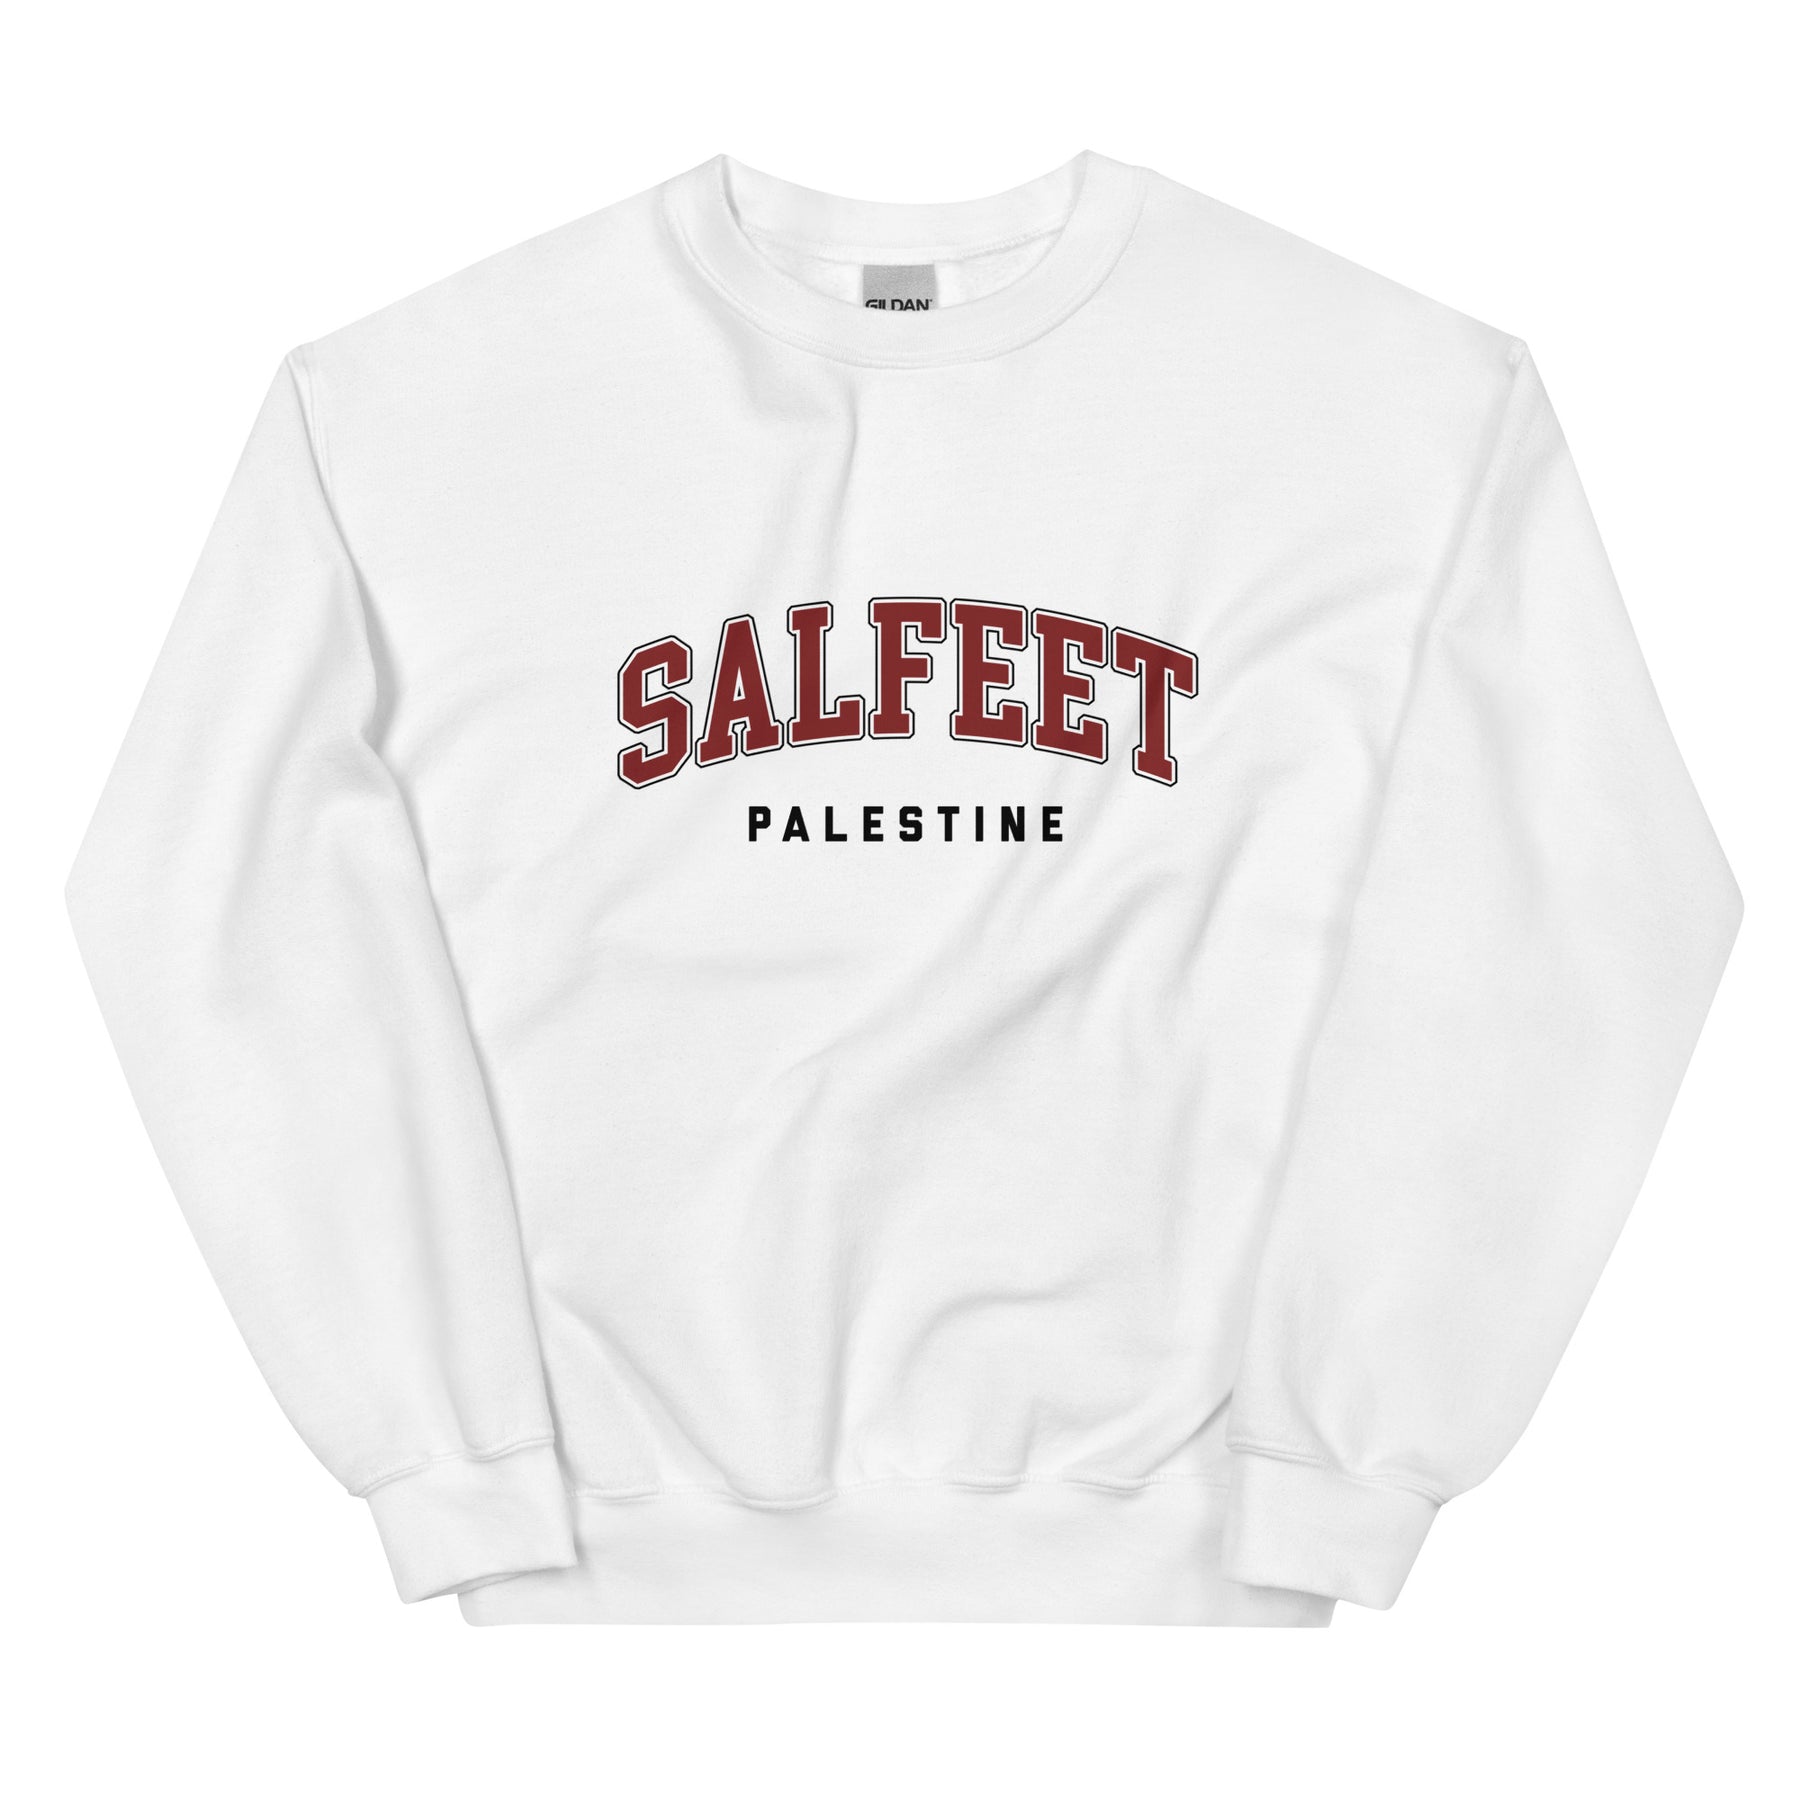 Salfeet, Palestine - Sweatshirt